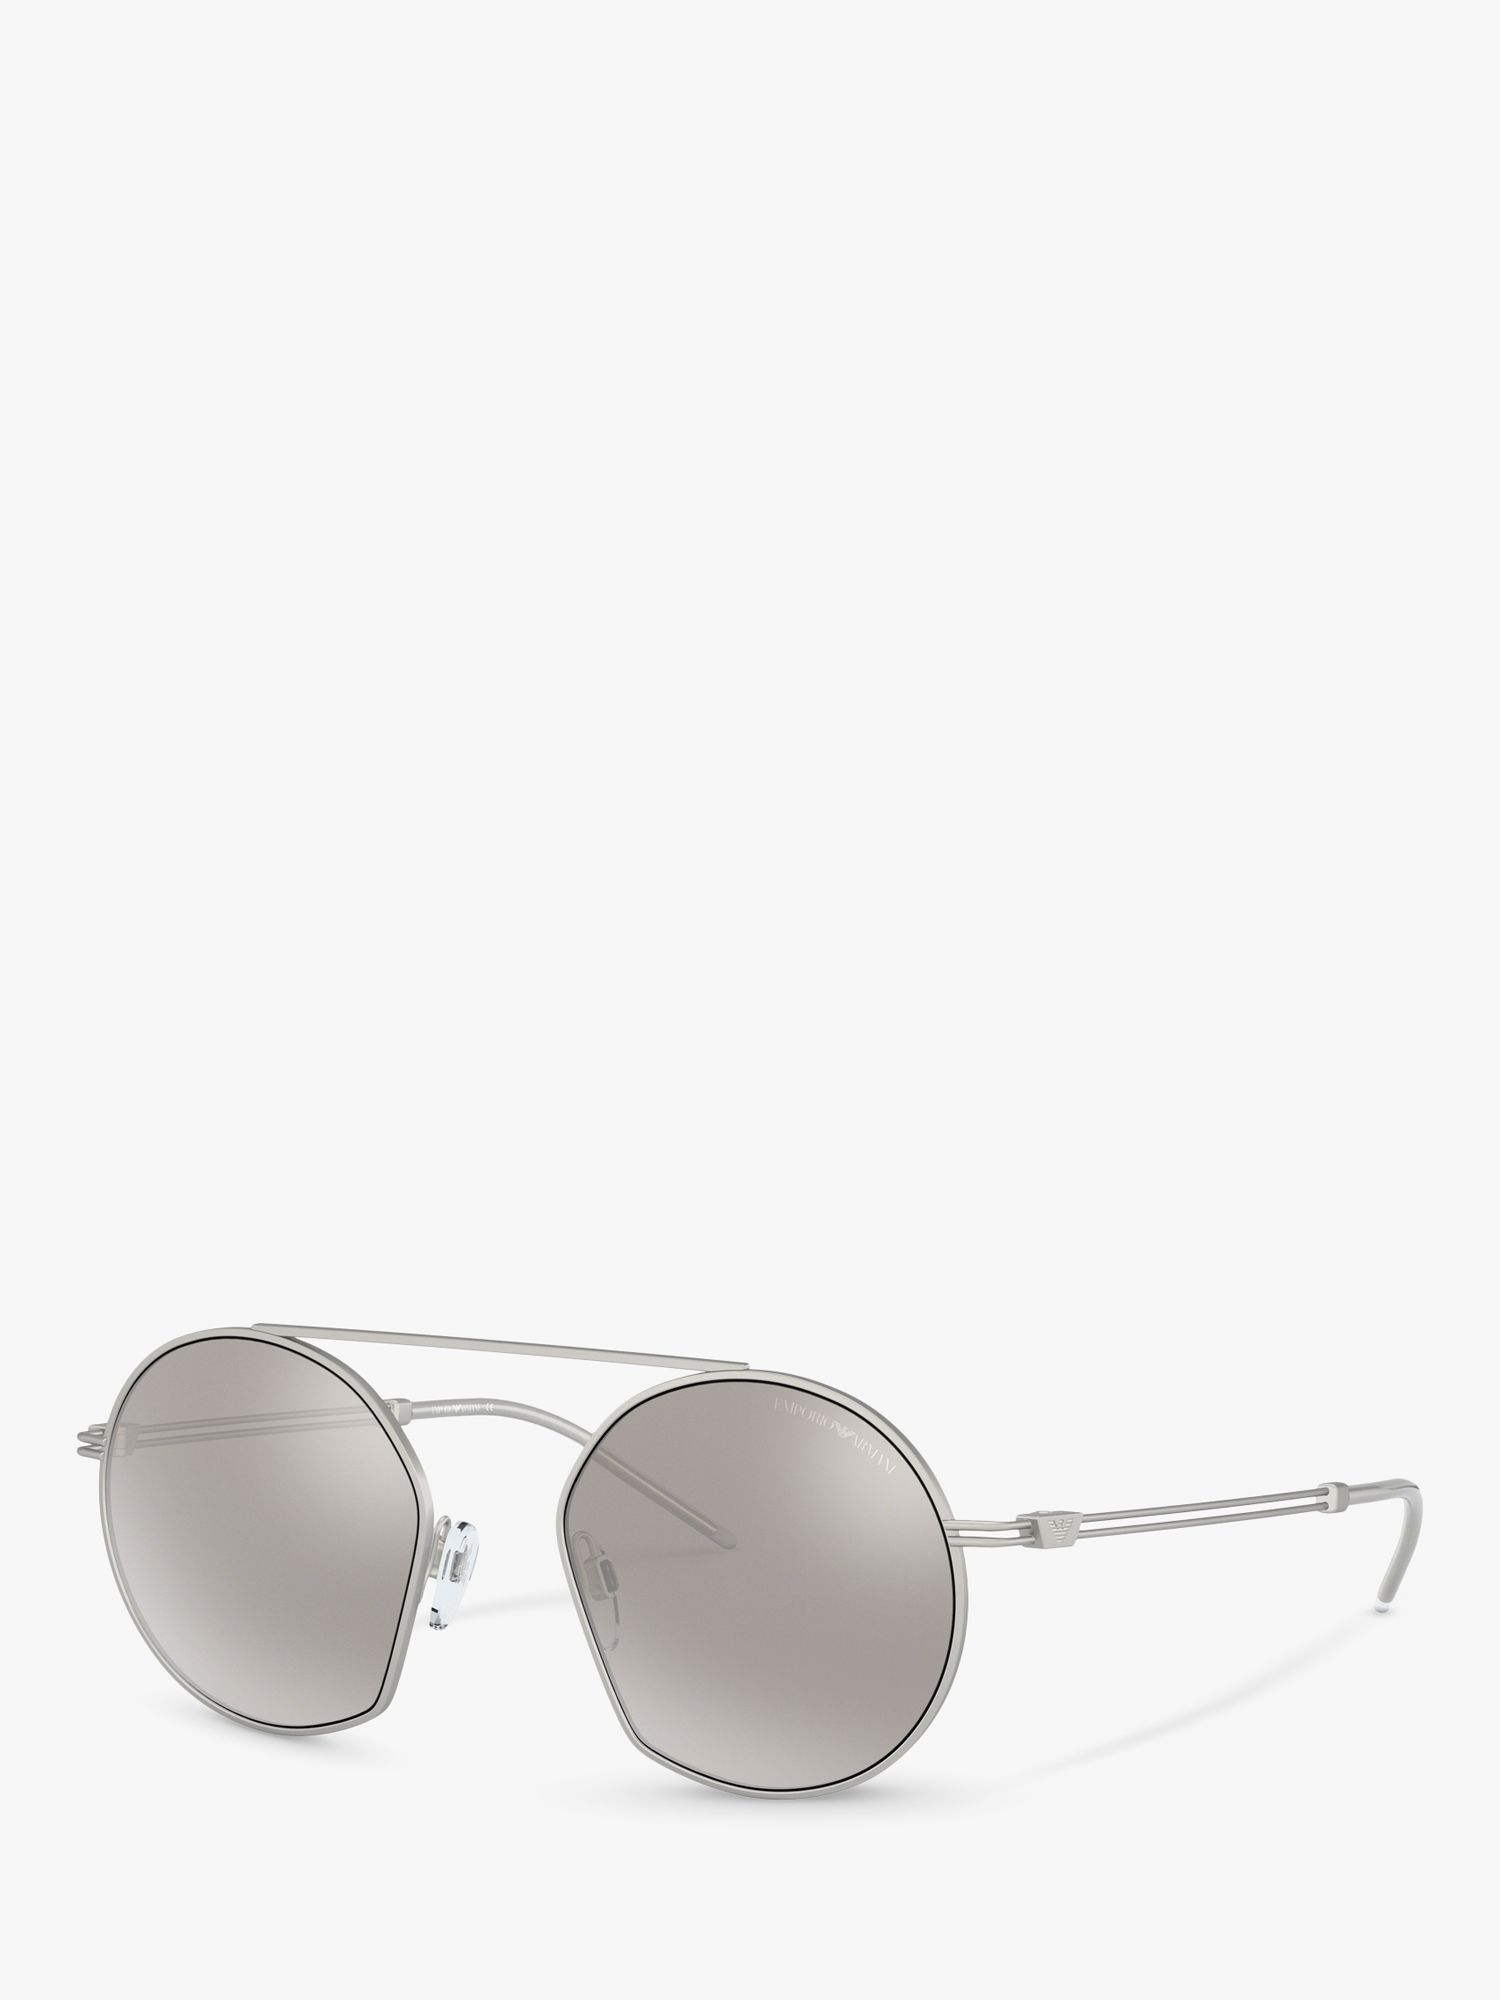 Buy Emporio Armani EA2078 Men's Asymmetric Round Sunglasses, Matte Silver Online at johnlewis.com